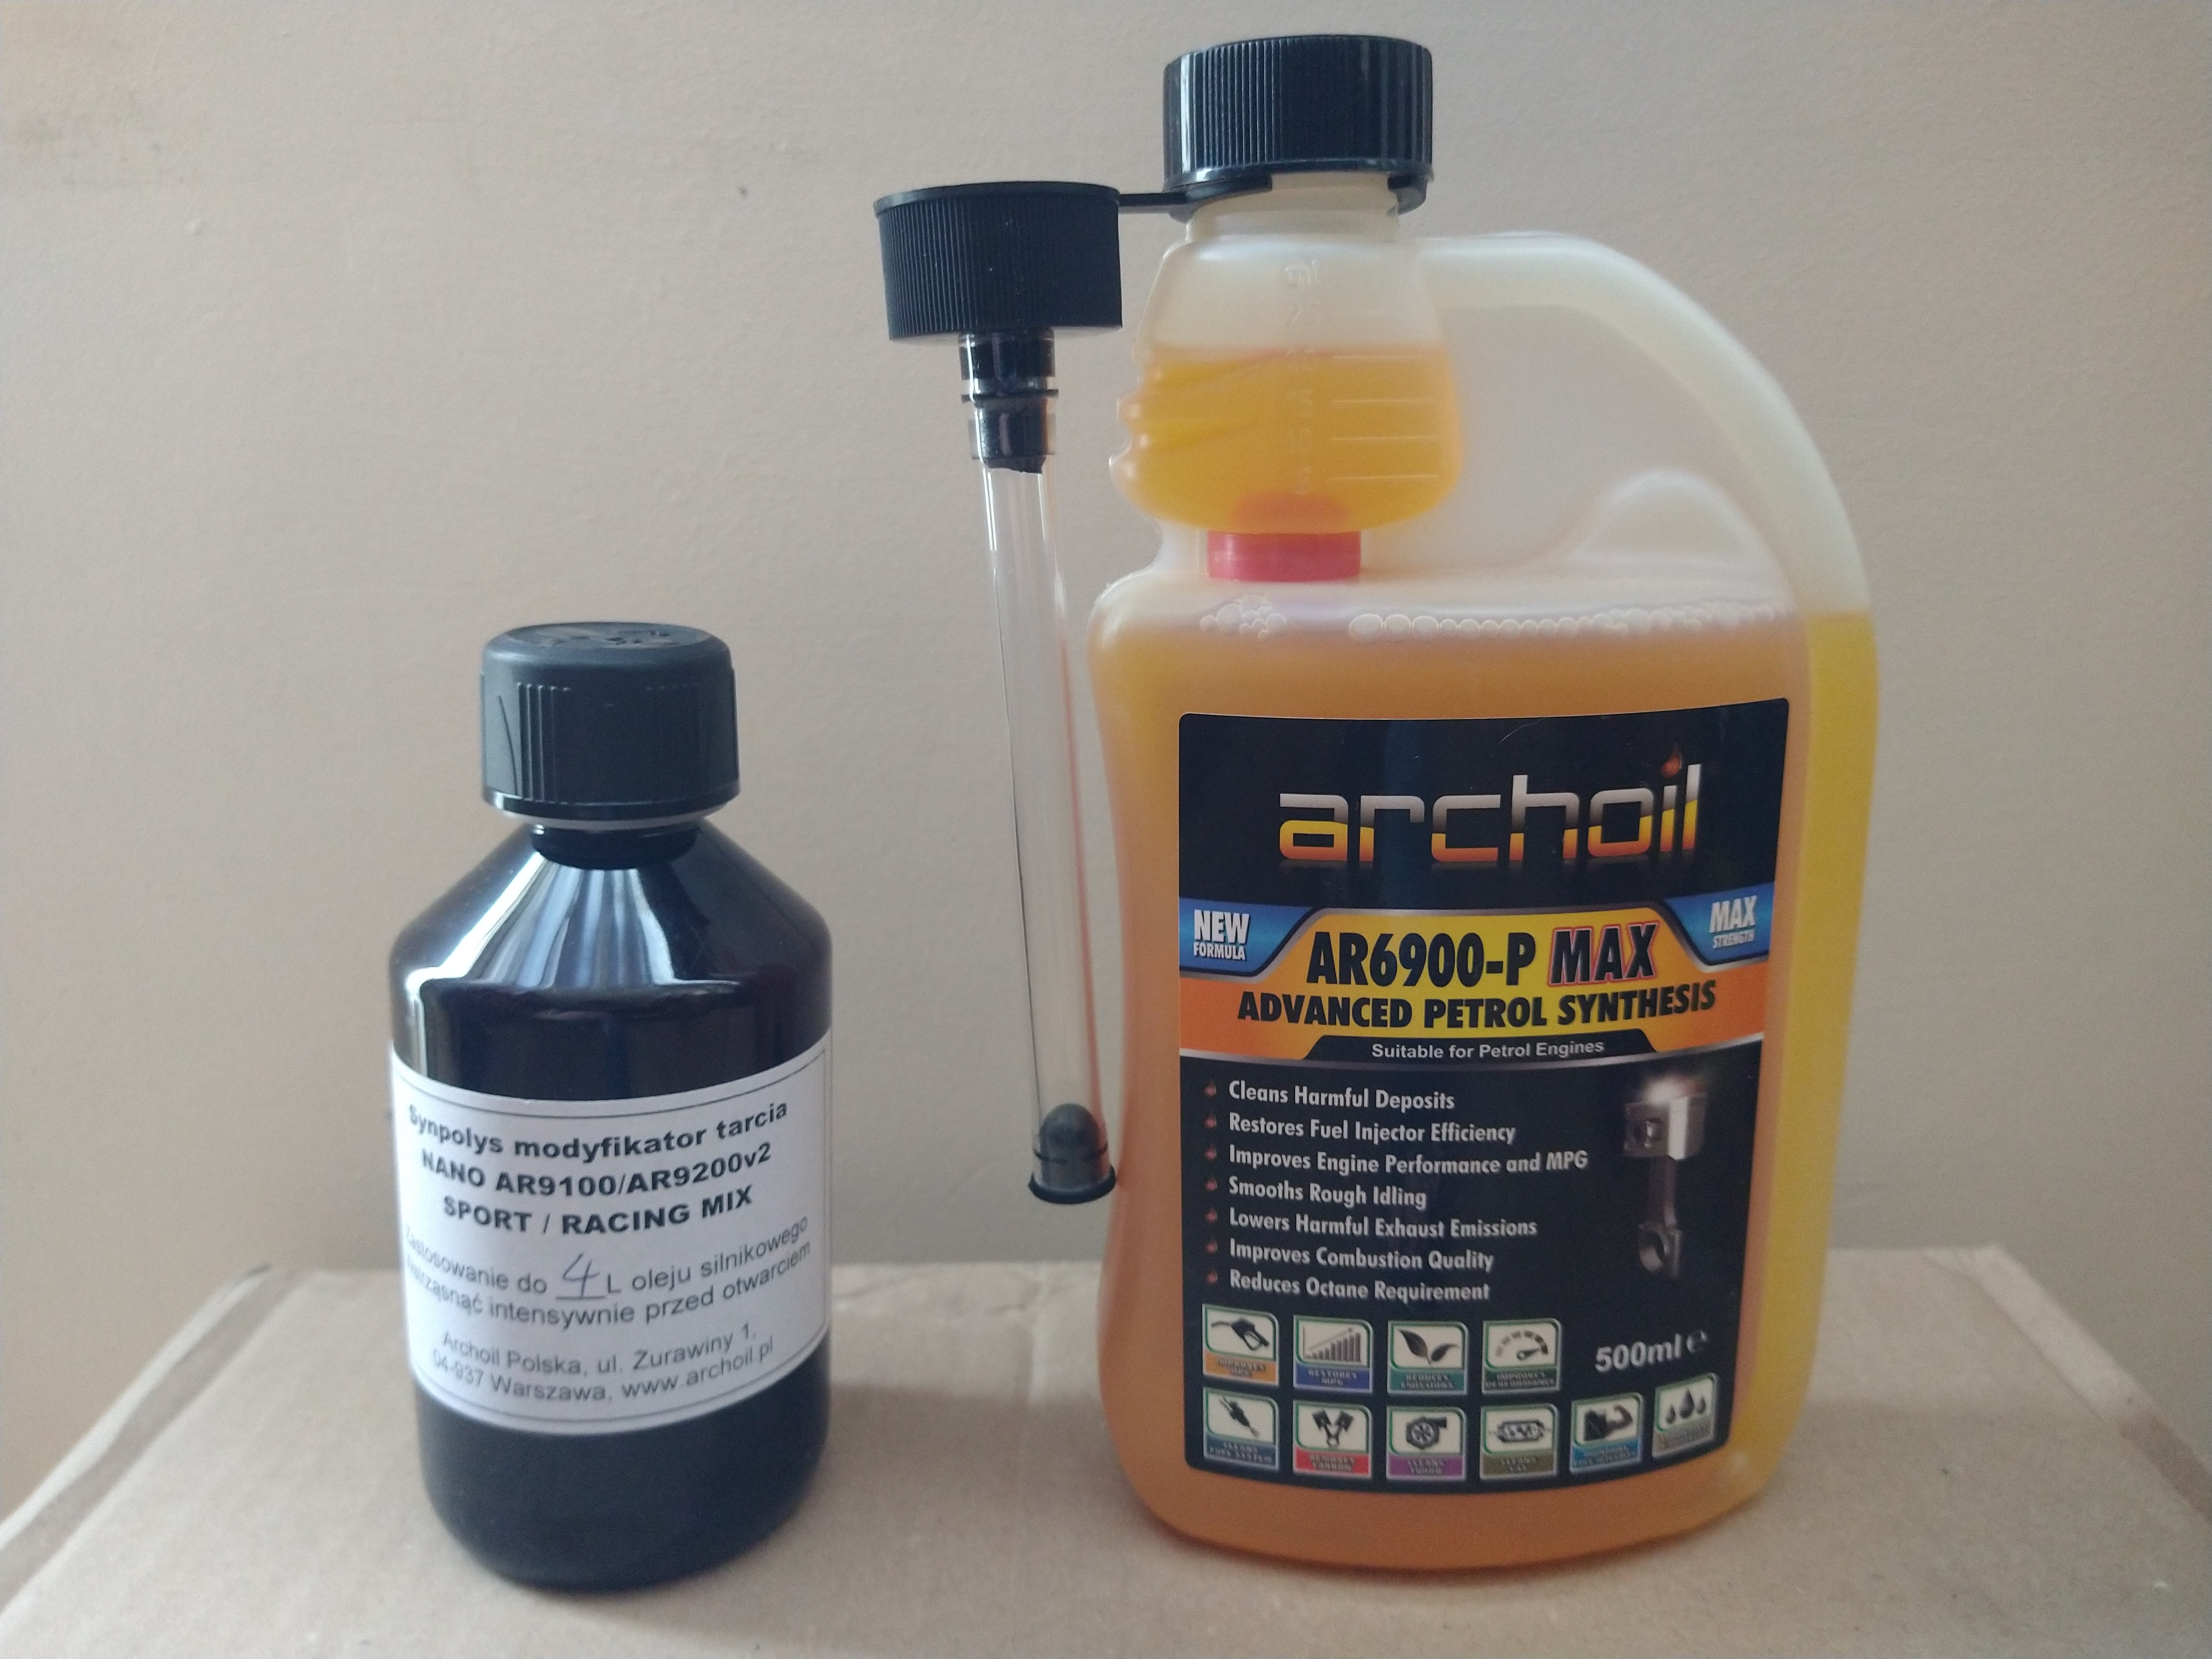 Archoli AR 6900-P MAX i Mix Nano AR9100AR9200v2.jpg